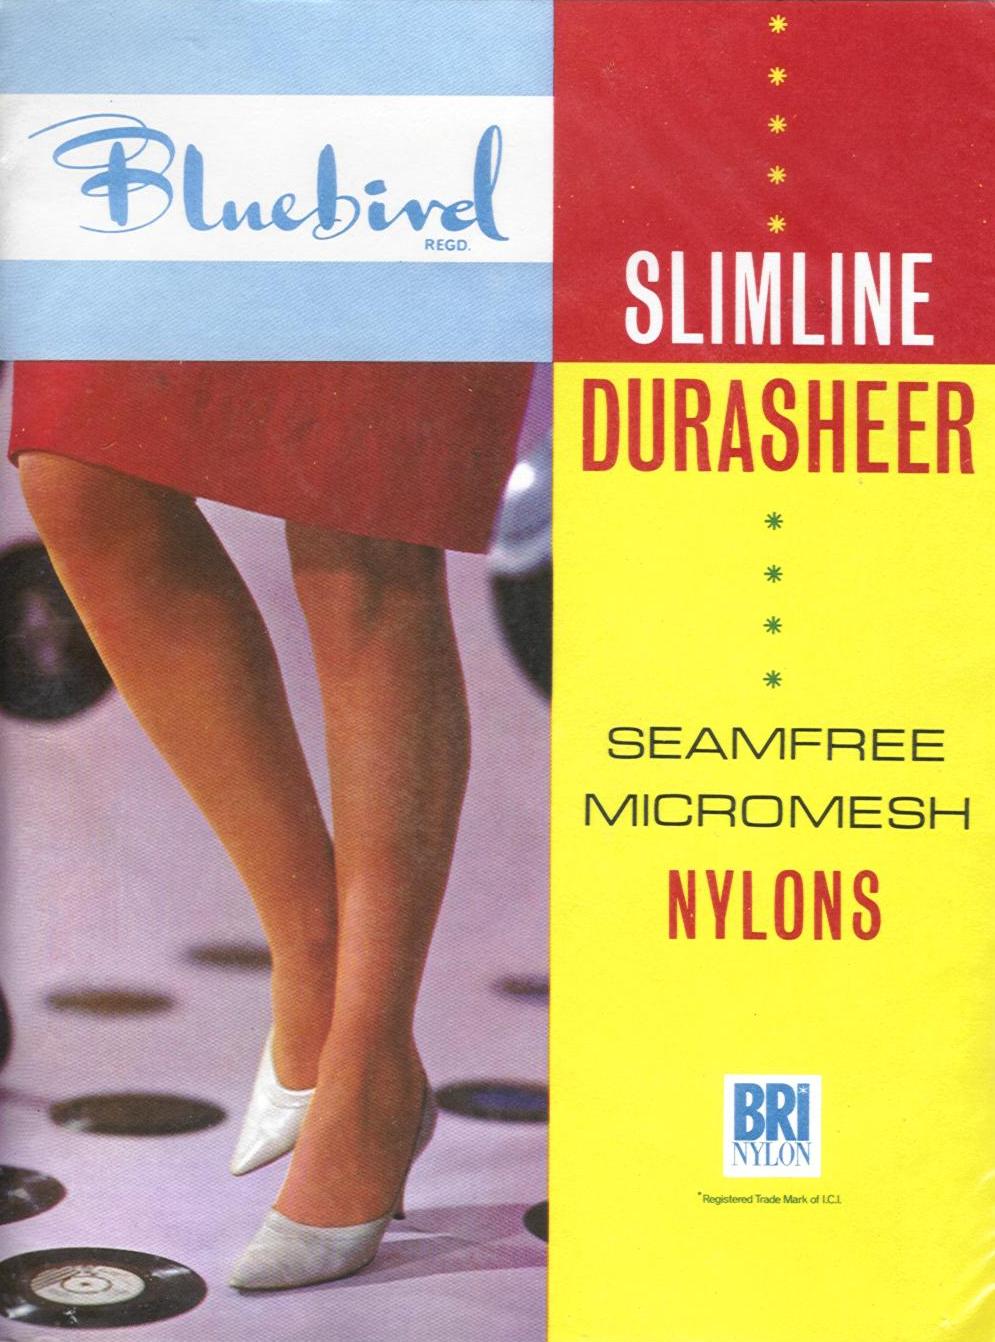 Bluebird Bermuda Size 9 1/2" to 10" Vintage RHT Nylon Stockings in two shades 